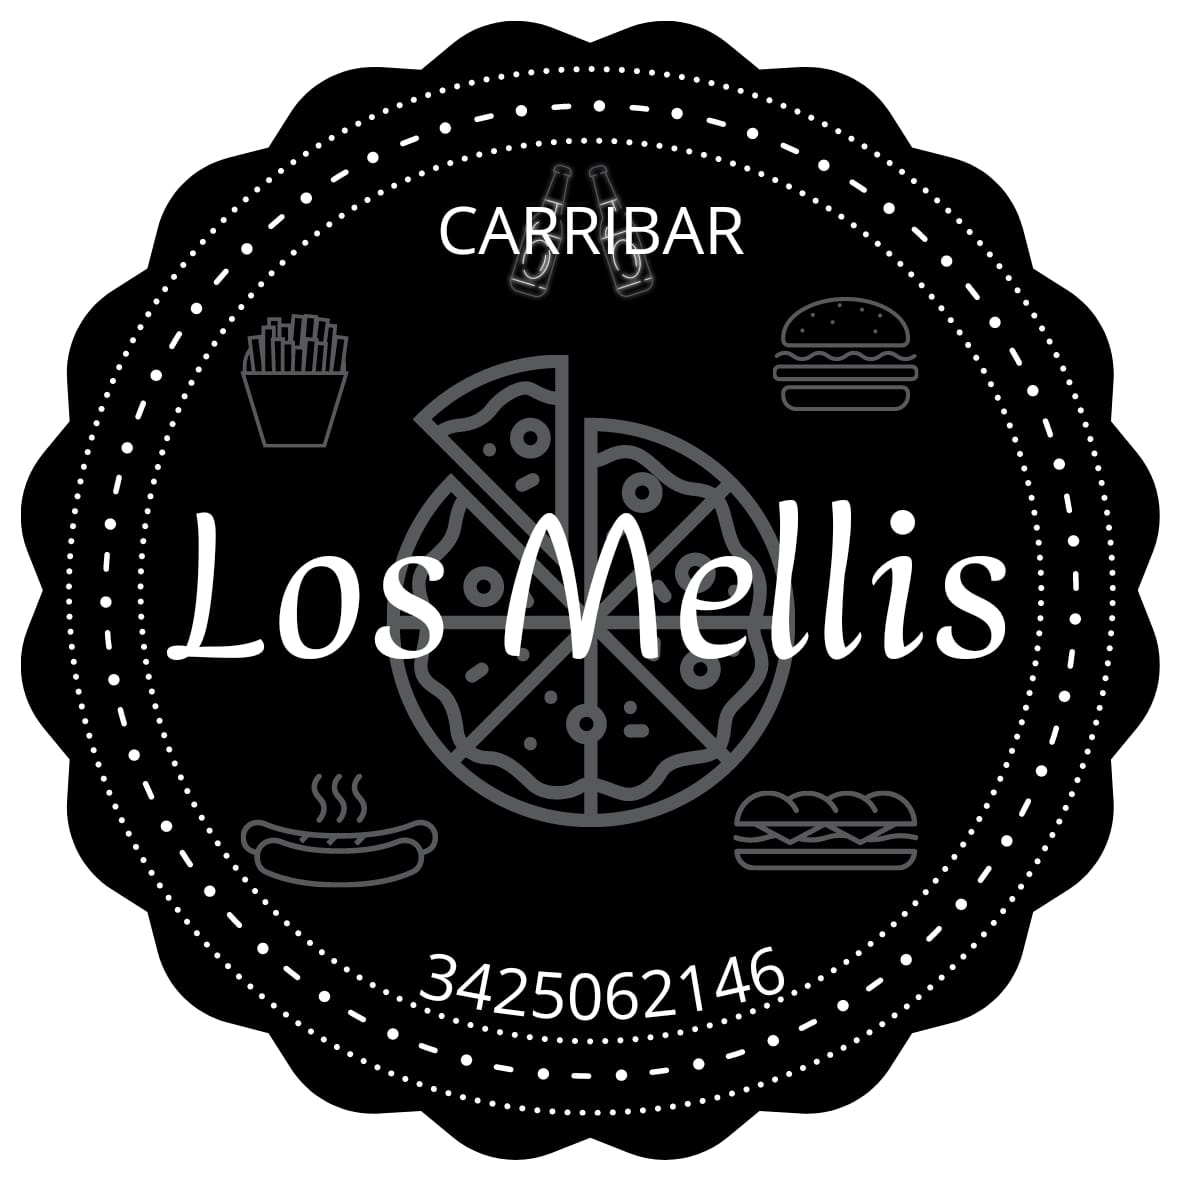 Carribar Los Mellis